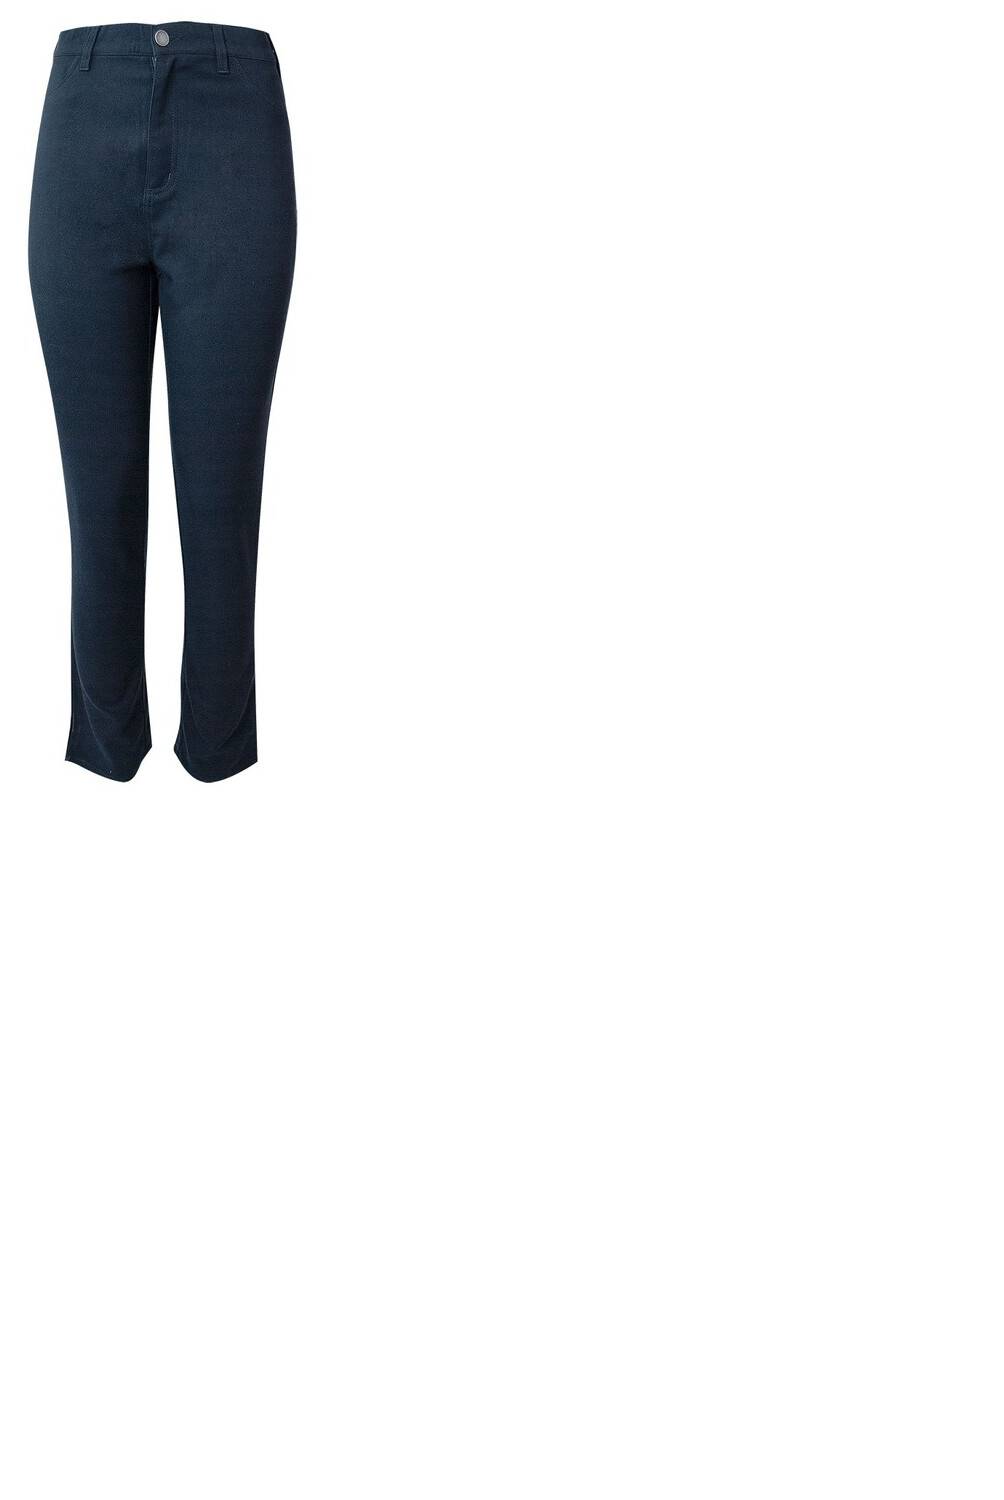 JAYSON - Pantalon Mujer Azul Leggins Pretina Alta